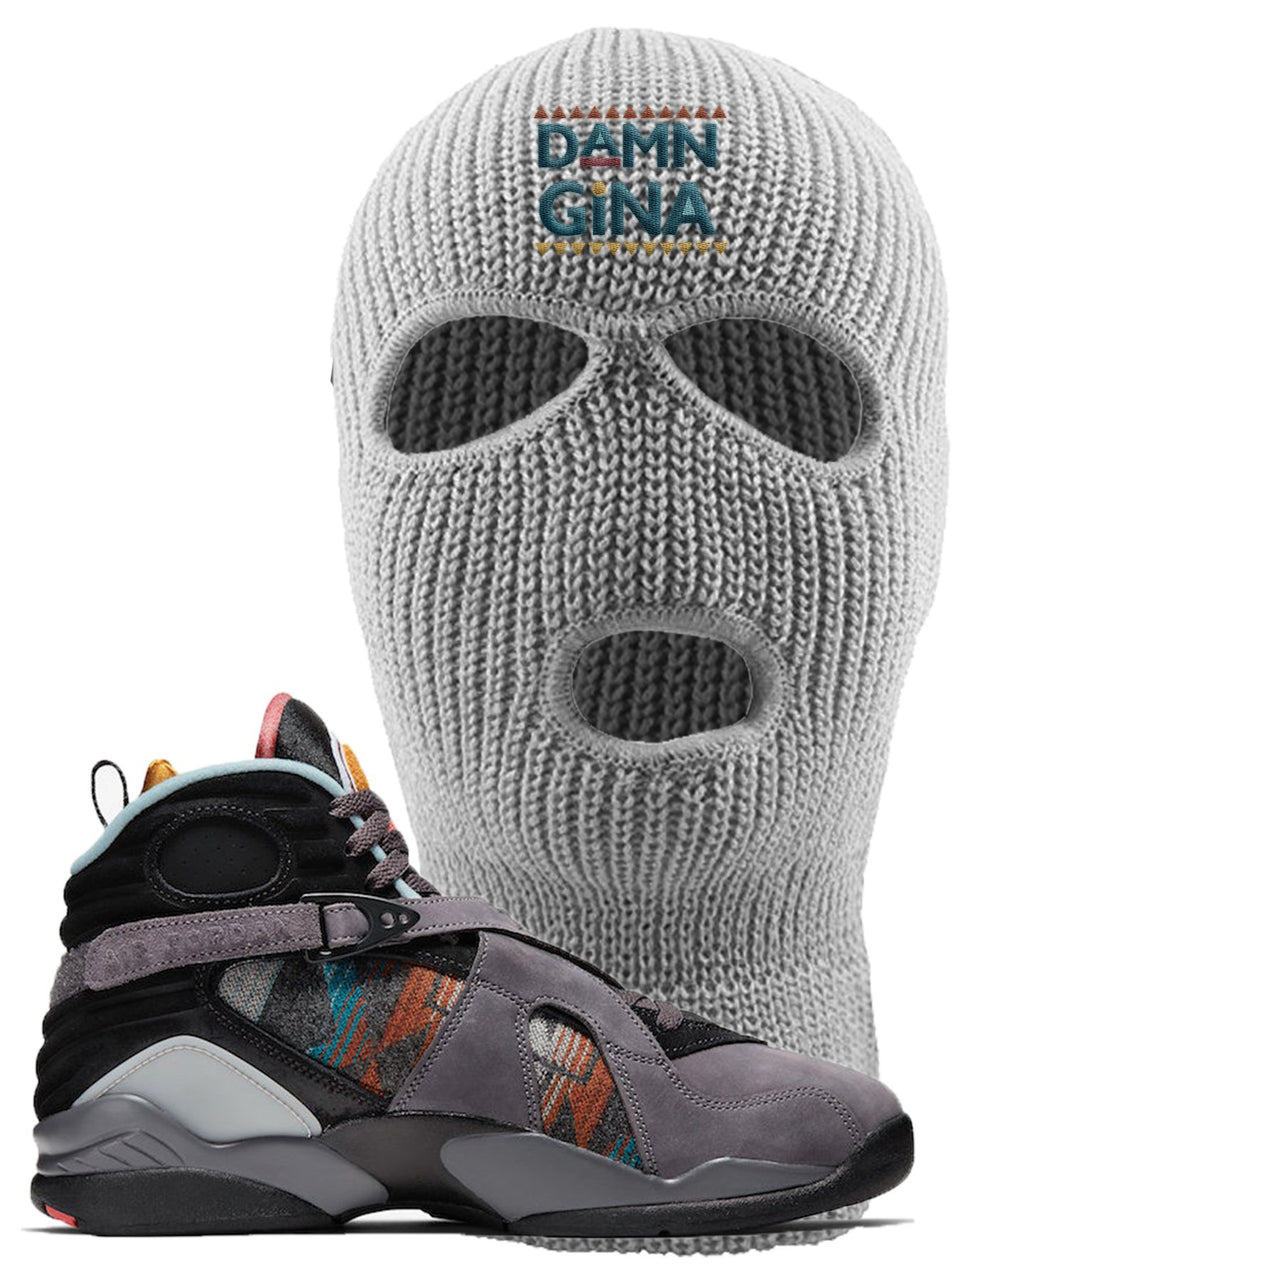 Jordan 8 N7 Pendleton Damn Gina Light Gray Sneaker Hook Up Ski Mask